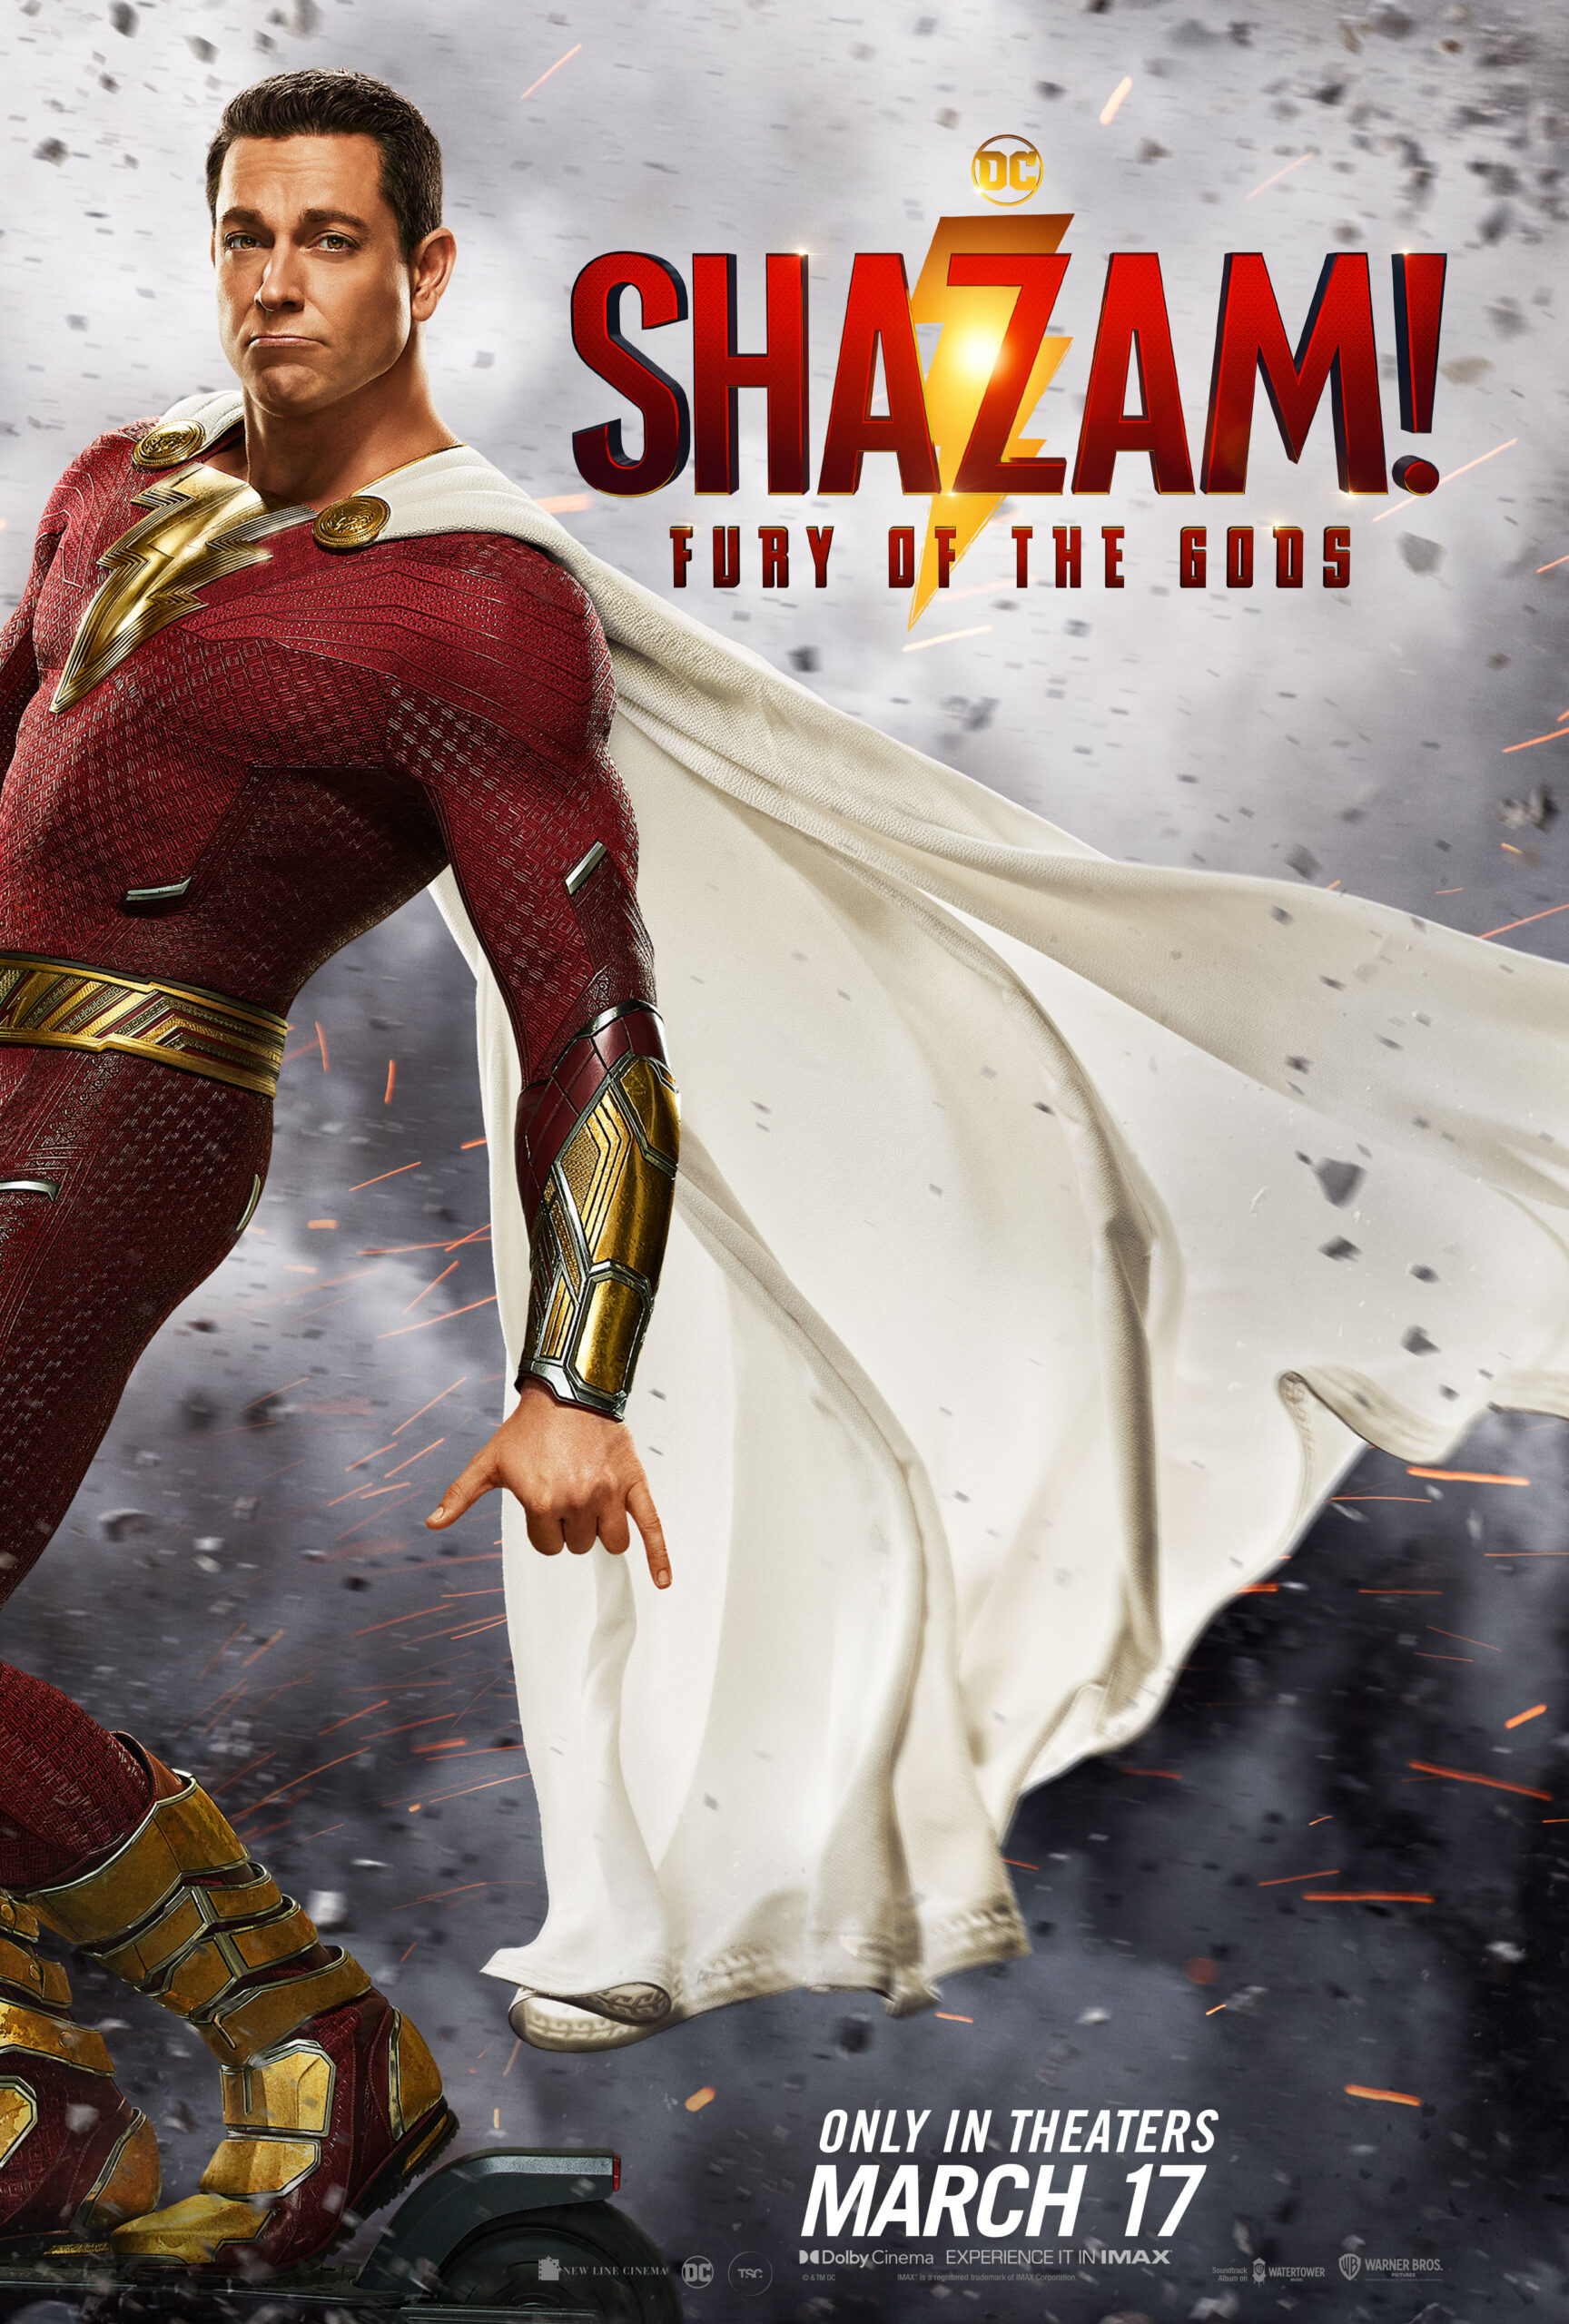 Shazam!' Sequel is a Box Office Bust